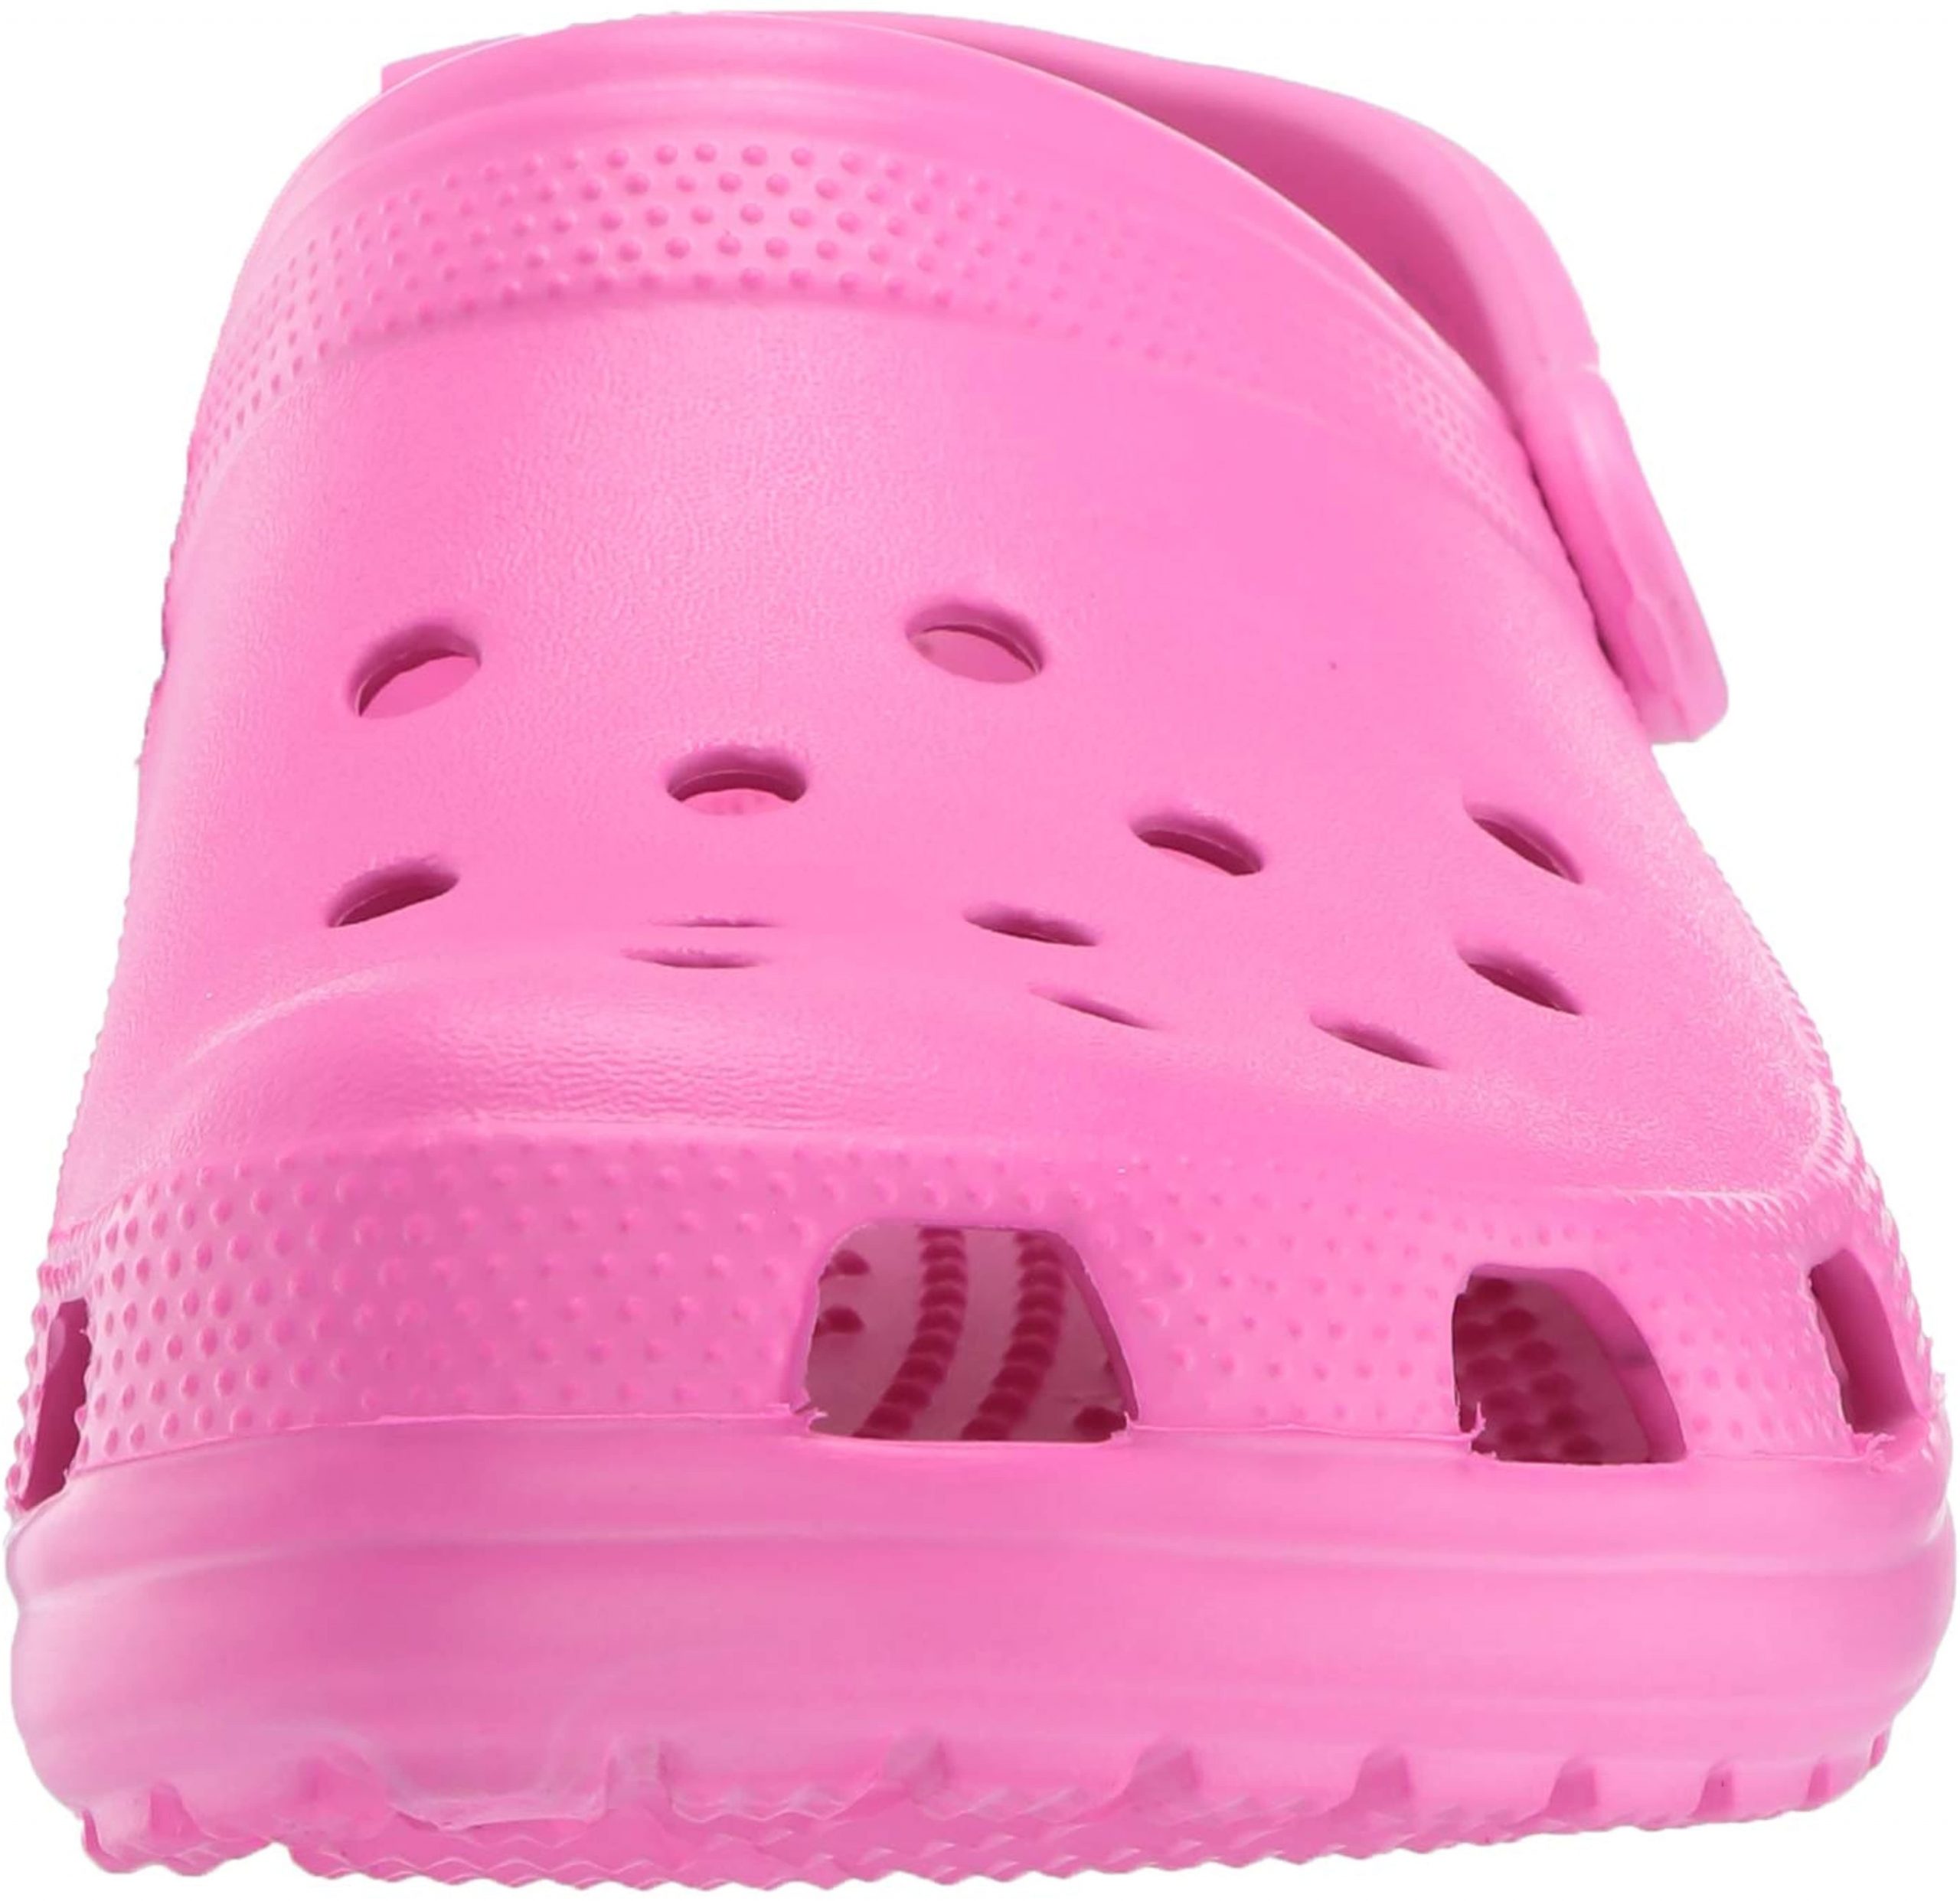 comfortable crocs shoes